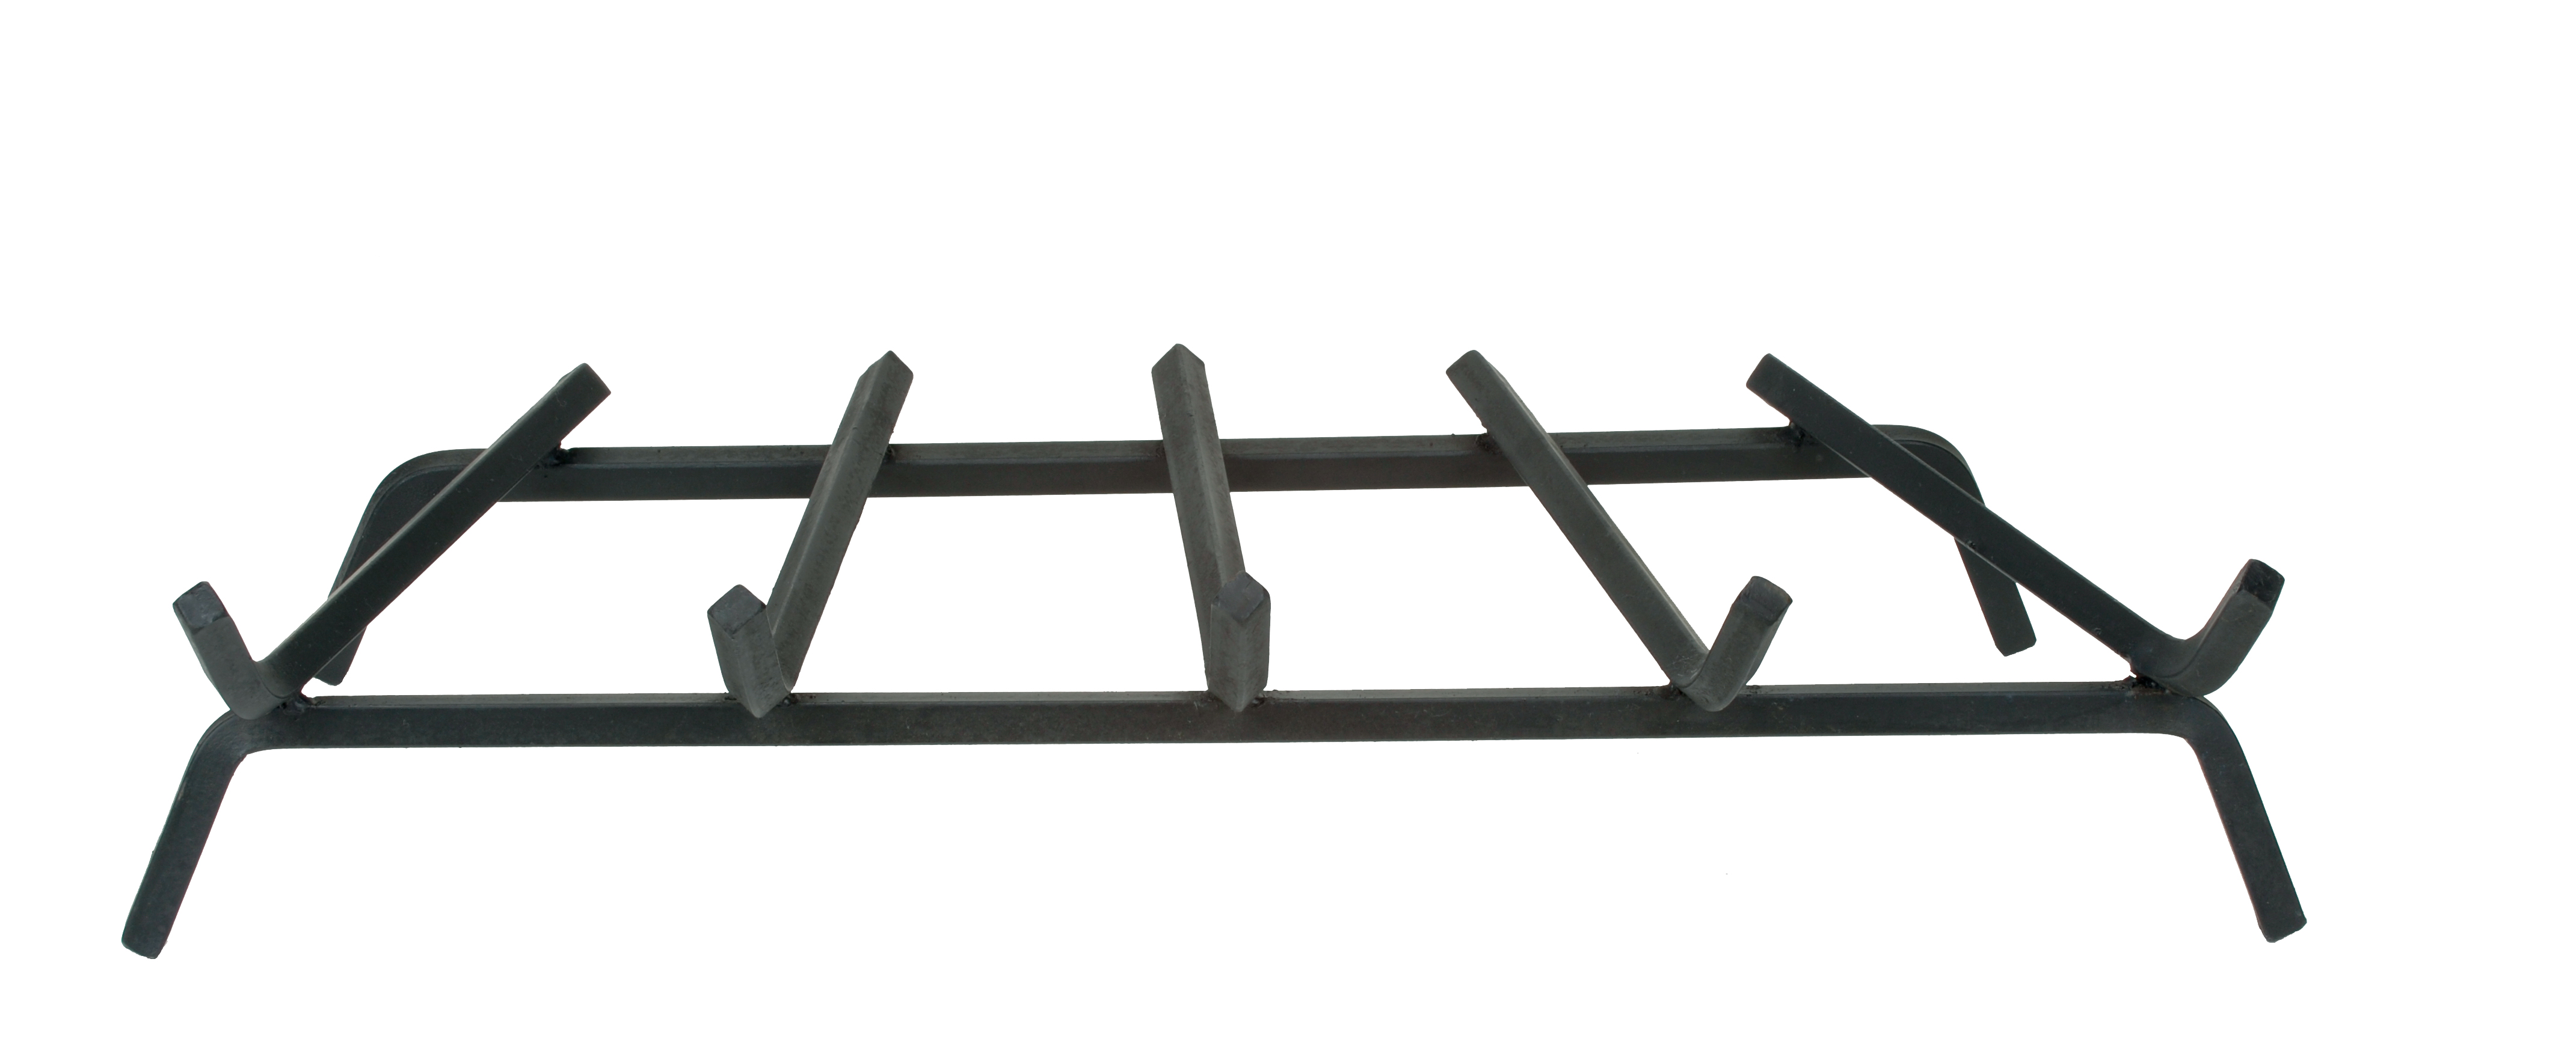 black steel 1/2 sq 7 bar grate product image